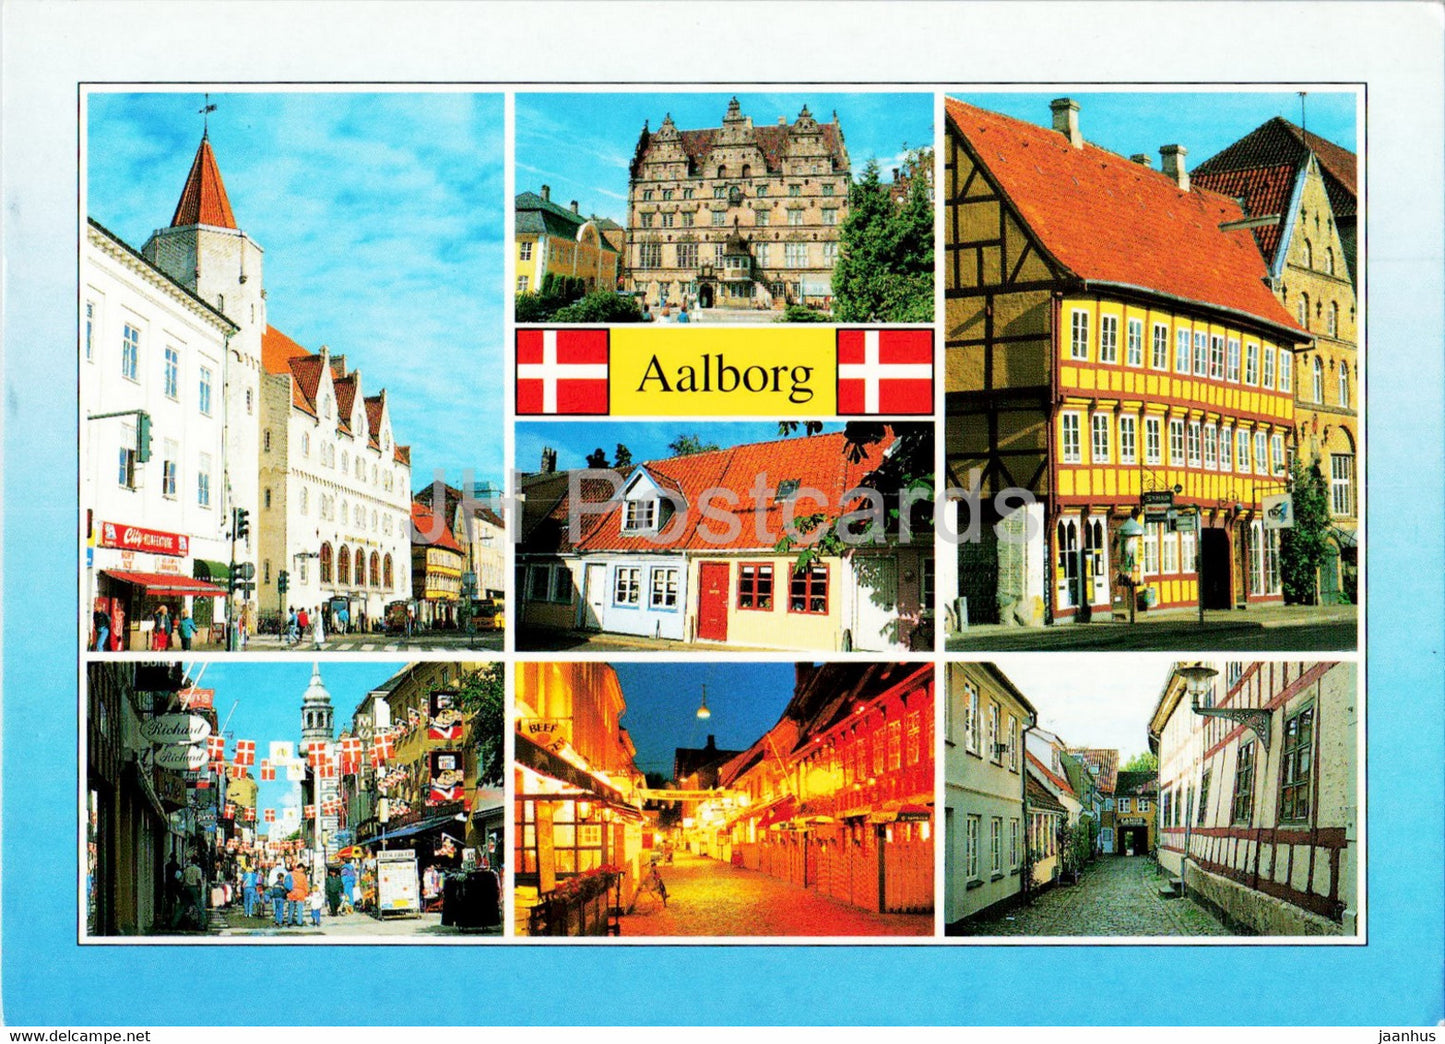 Aalborg - city views - multiview - 1996 - Denmark - used - JH Postcards